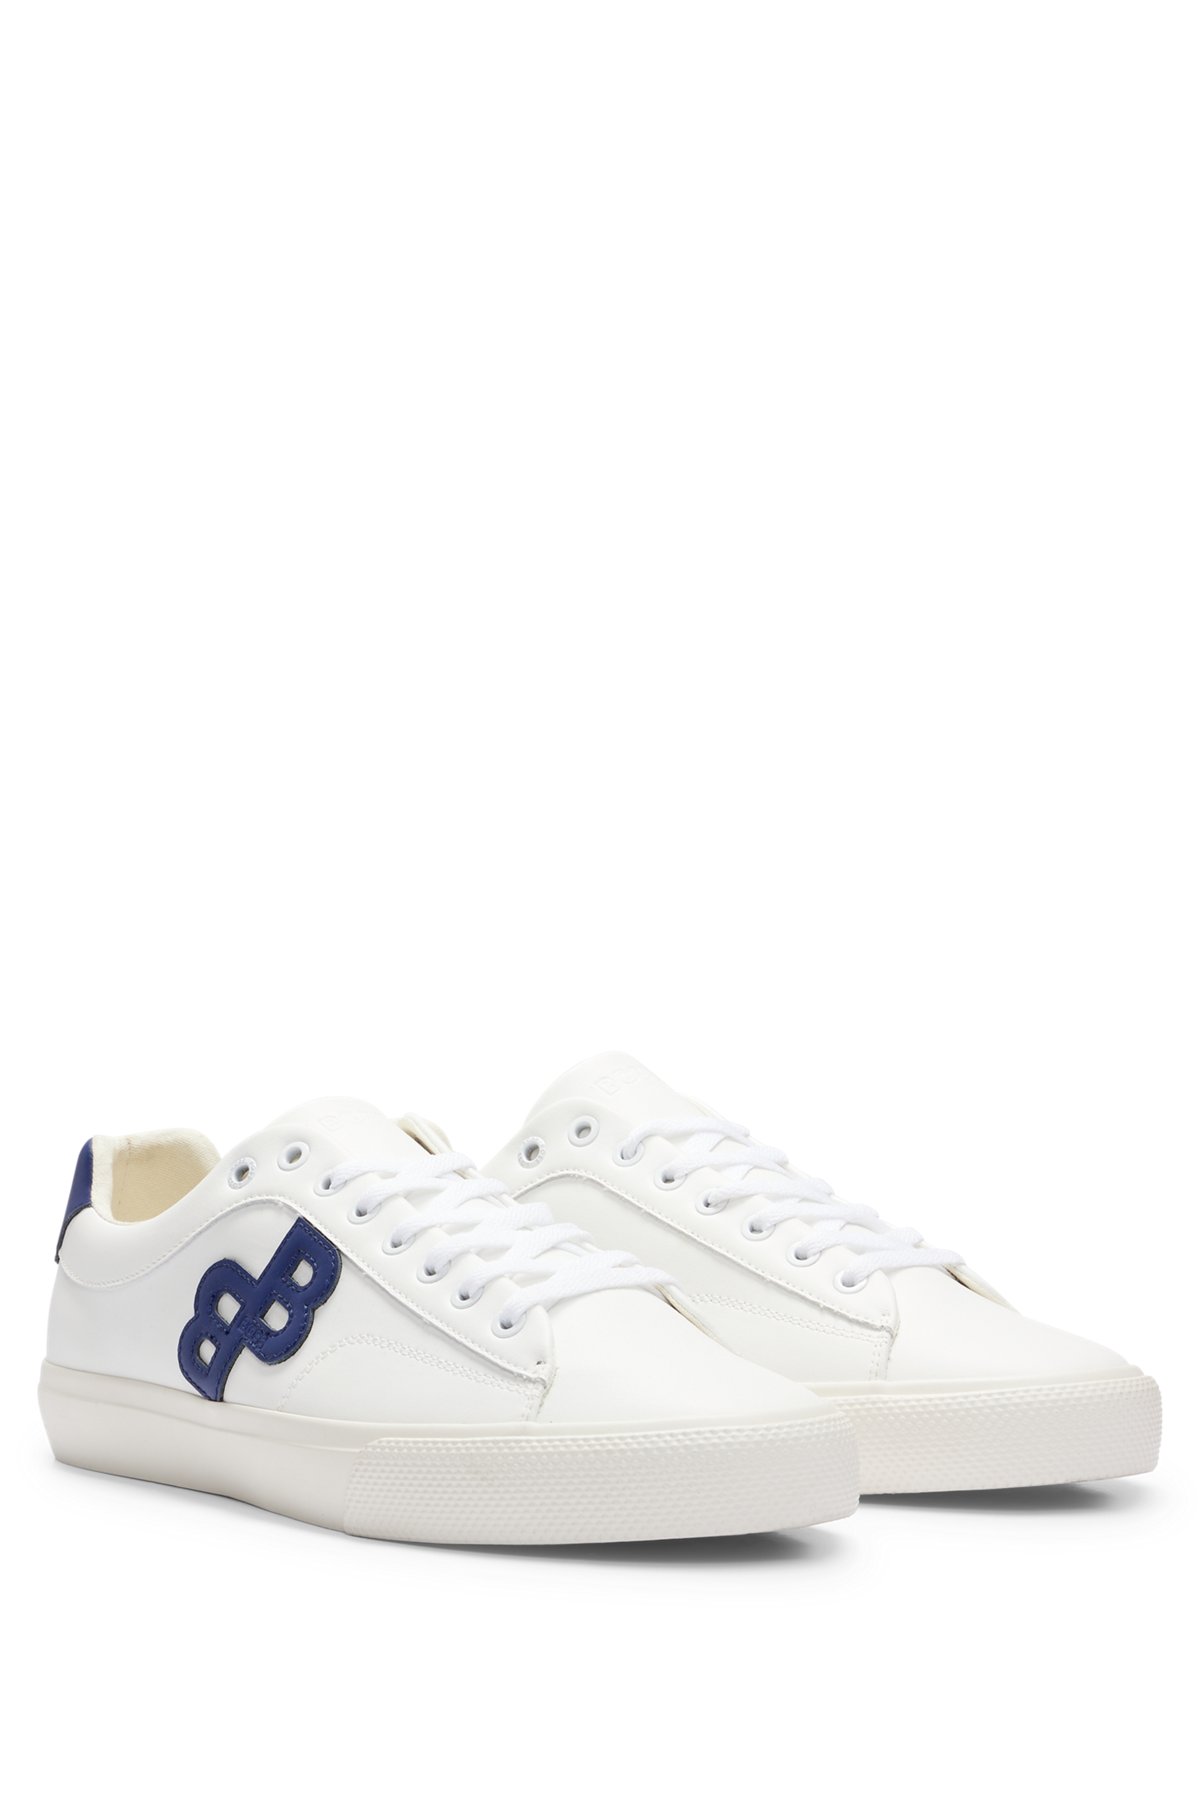 Lowtop Sneakers mit Monogramm-Detail, Weiß